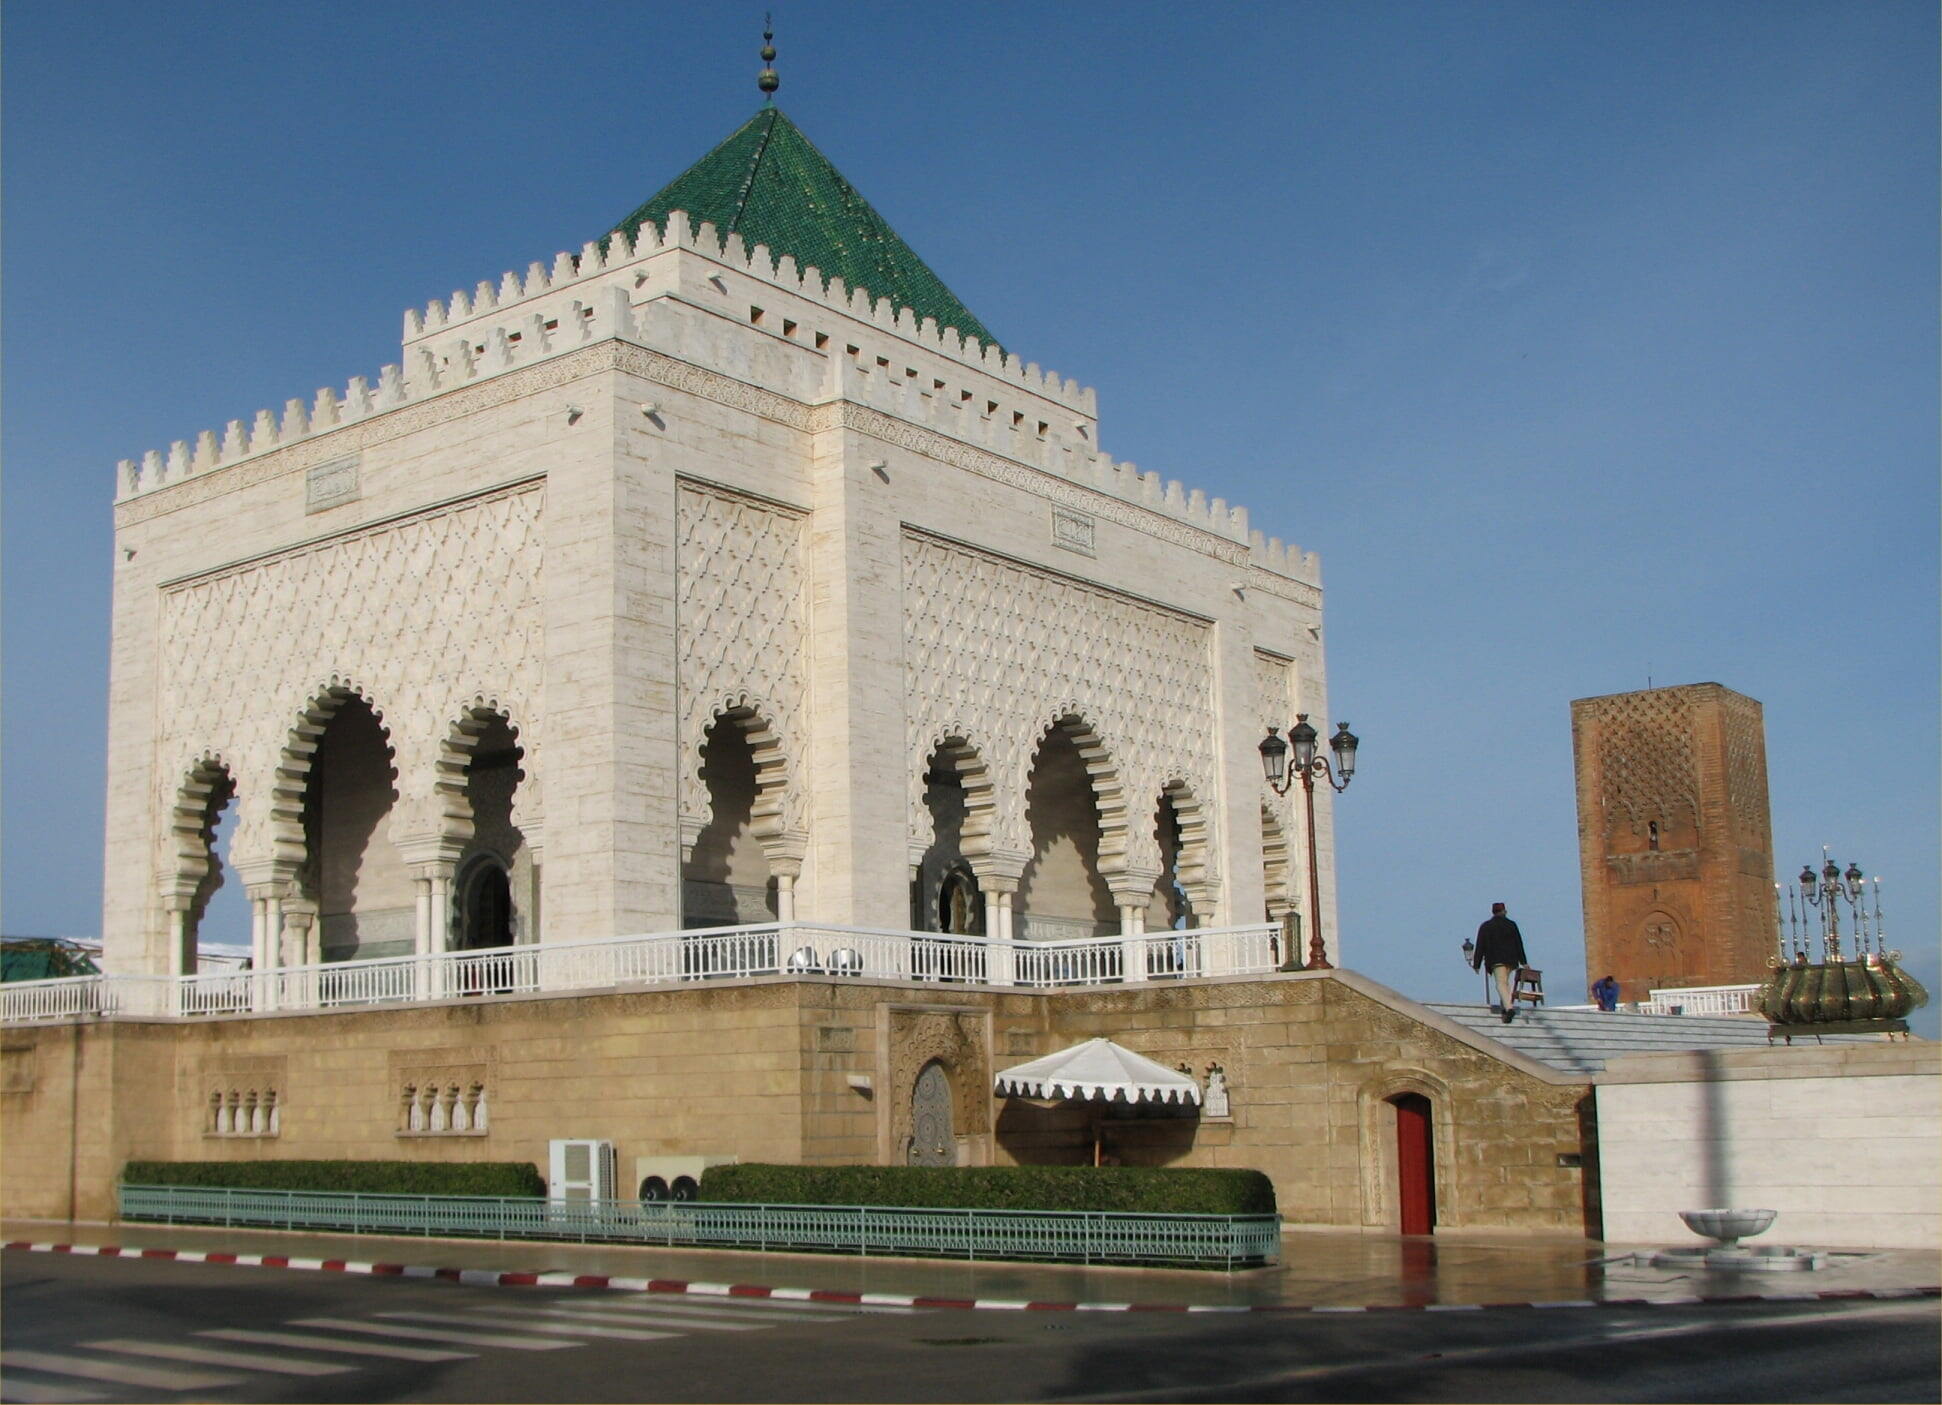 Rabat - Mohammed V Mausoleum, Rabat